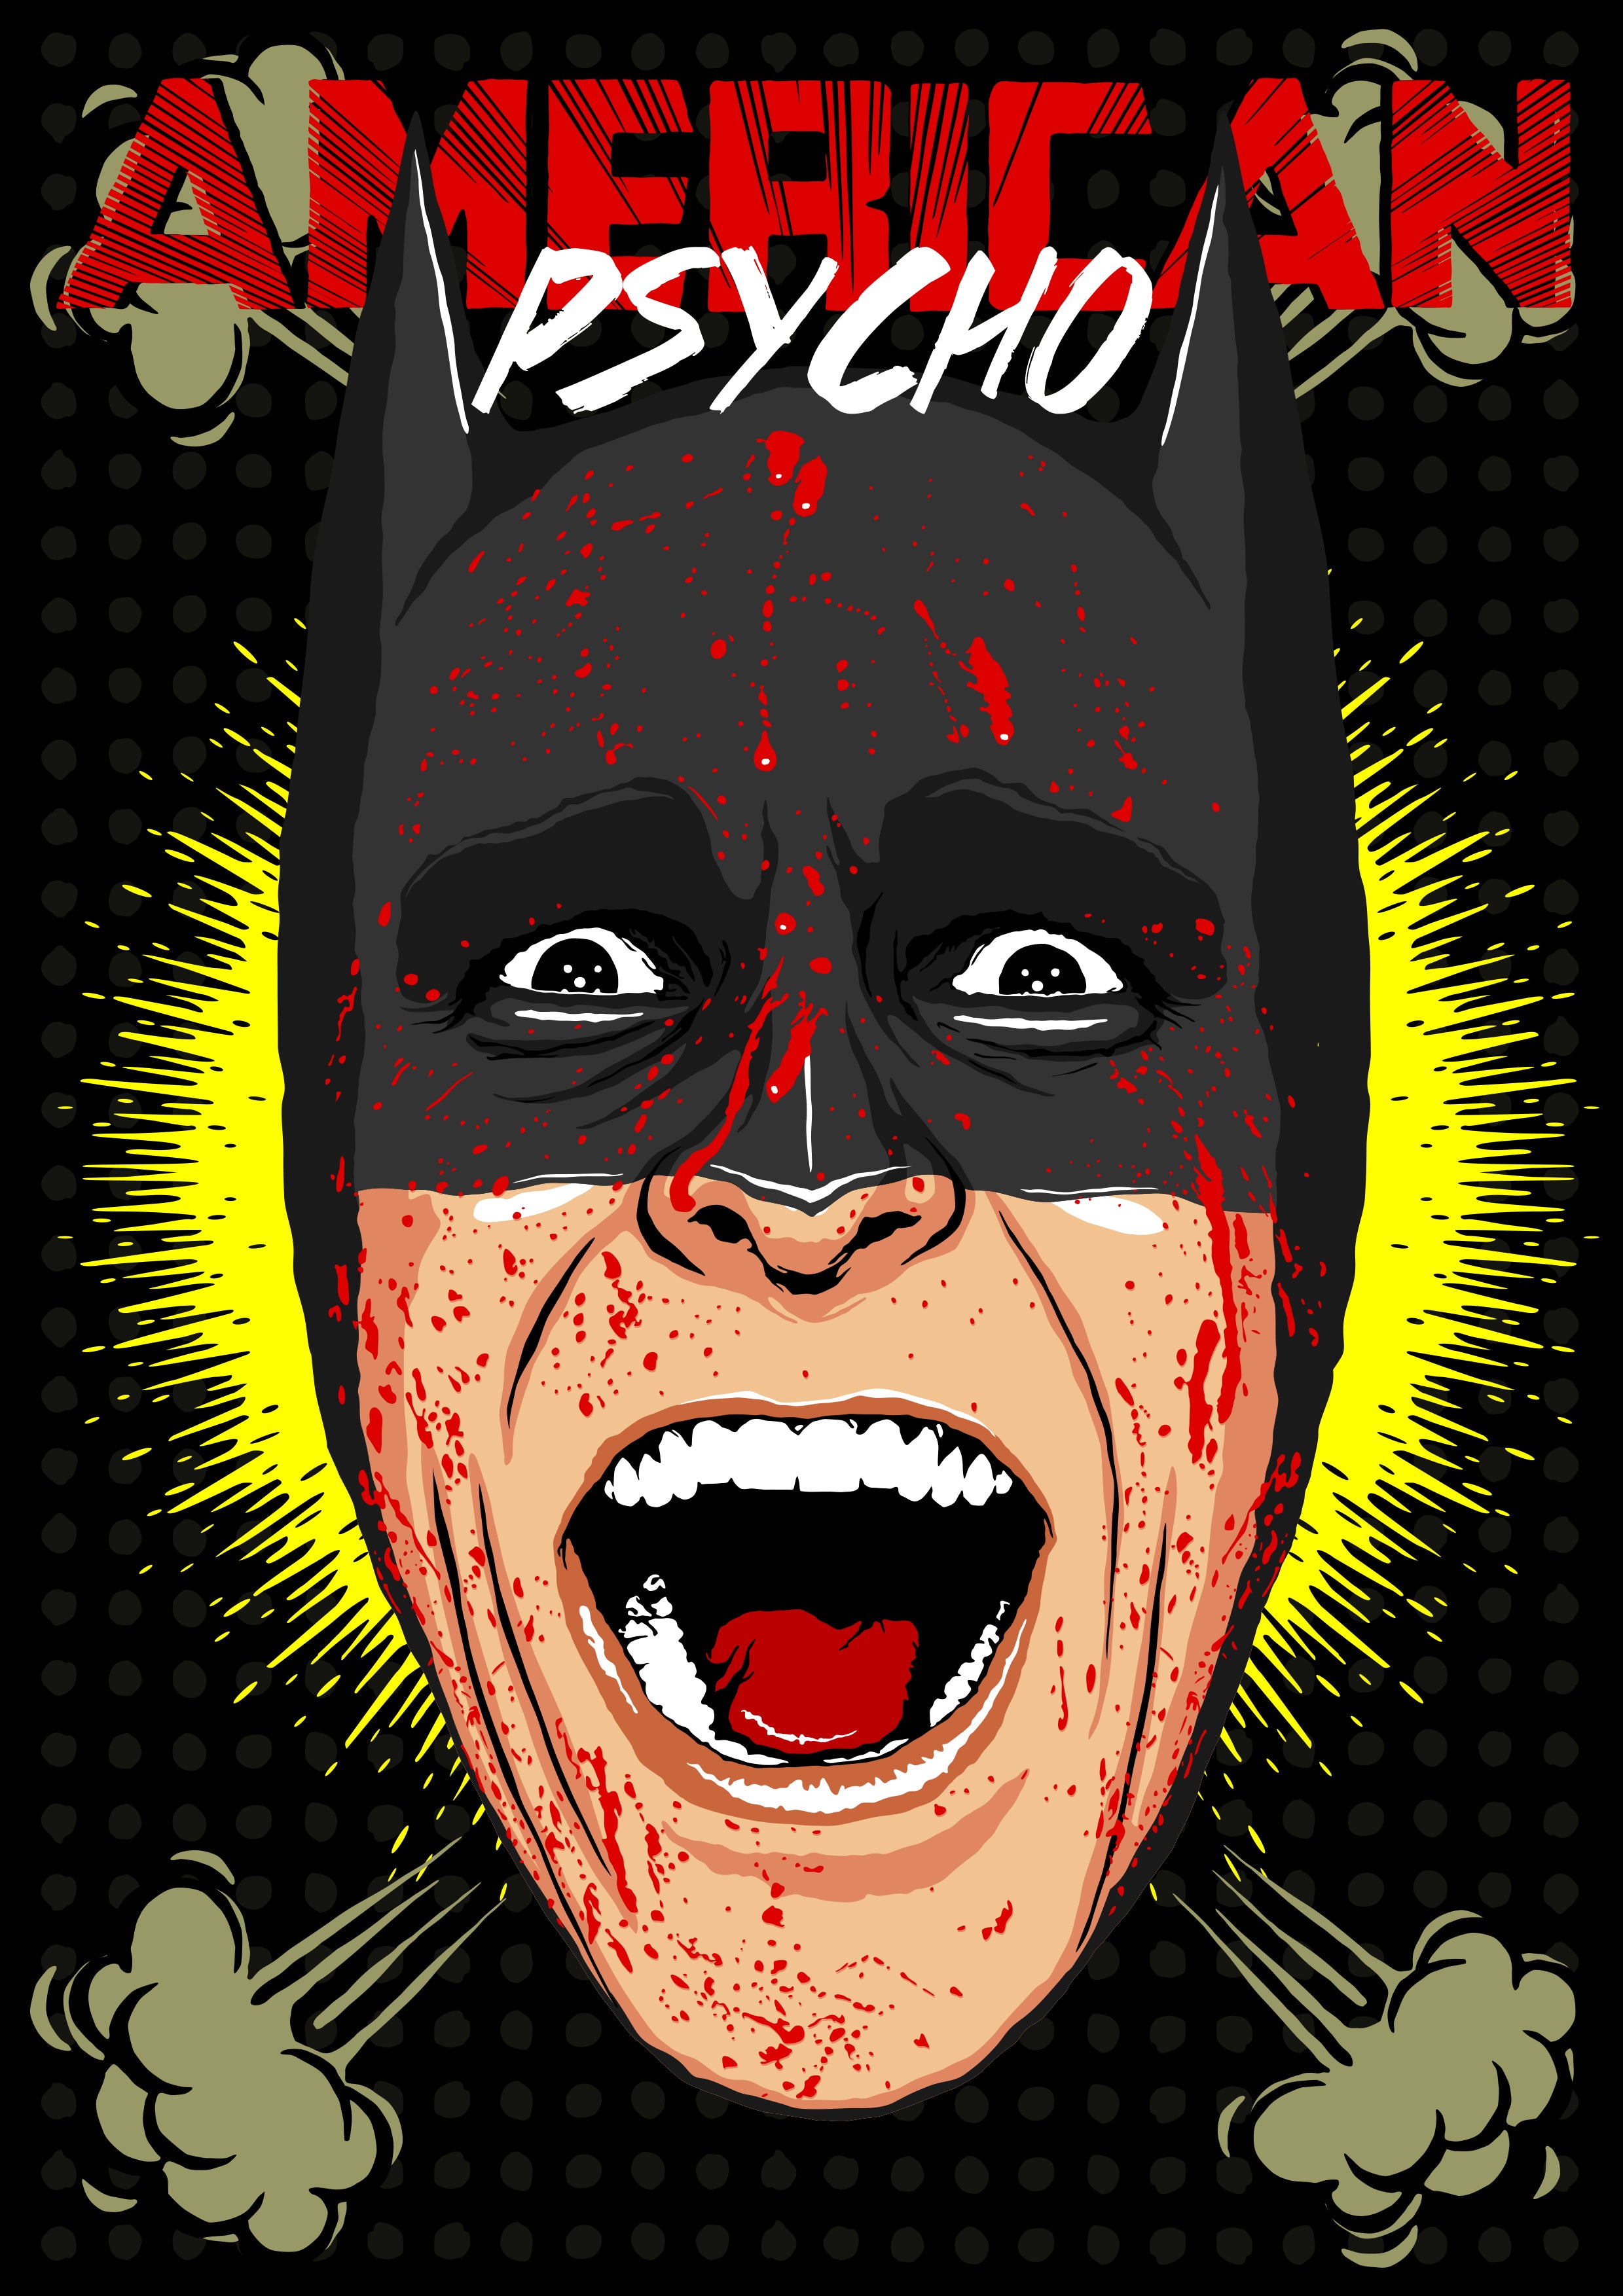 "American Psycho - Batman" by Butcher Billy